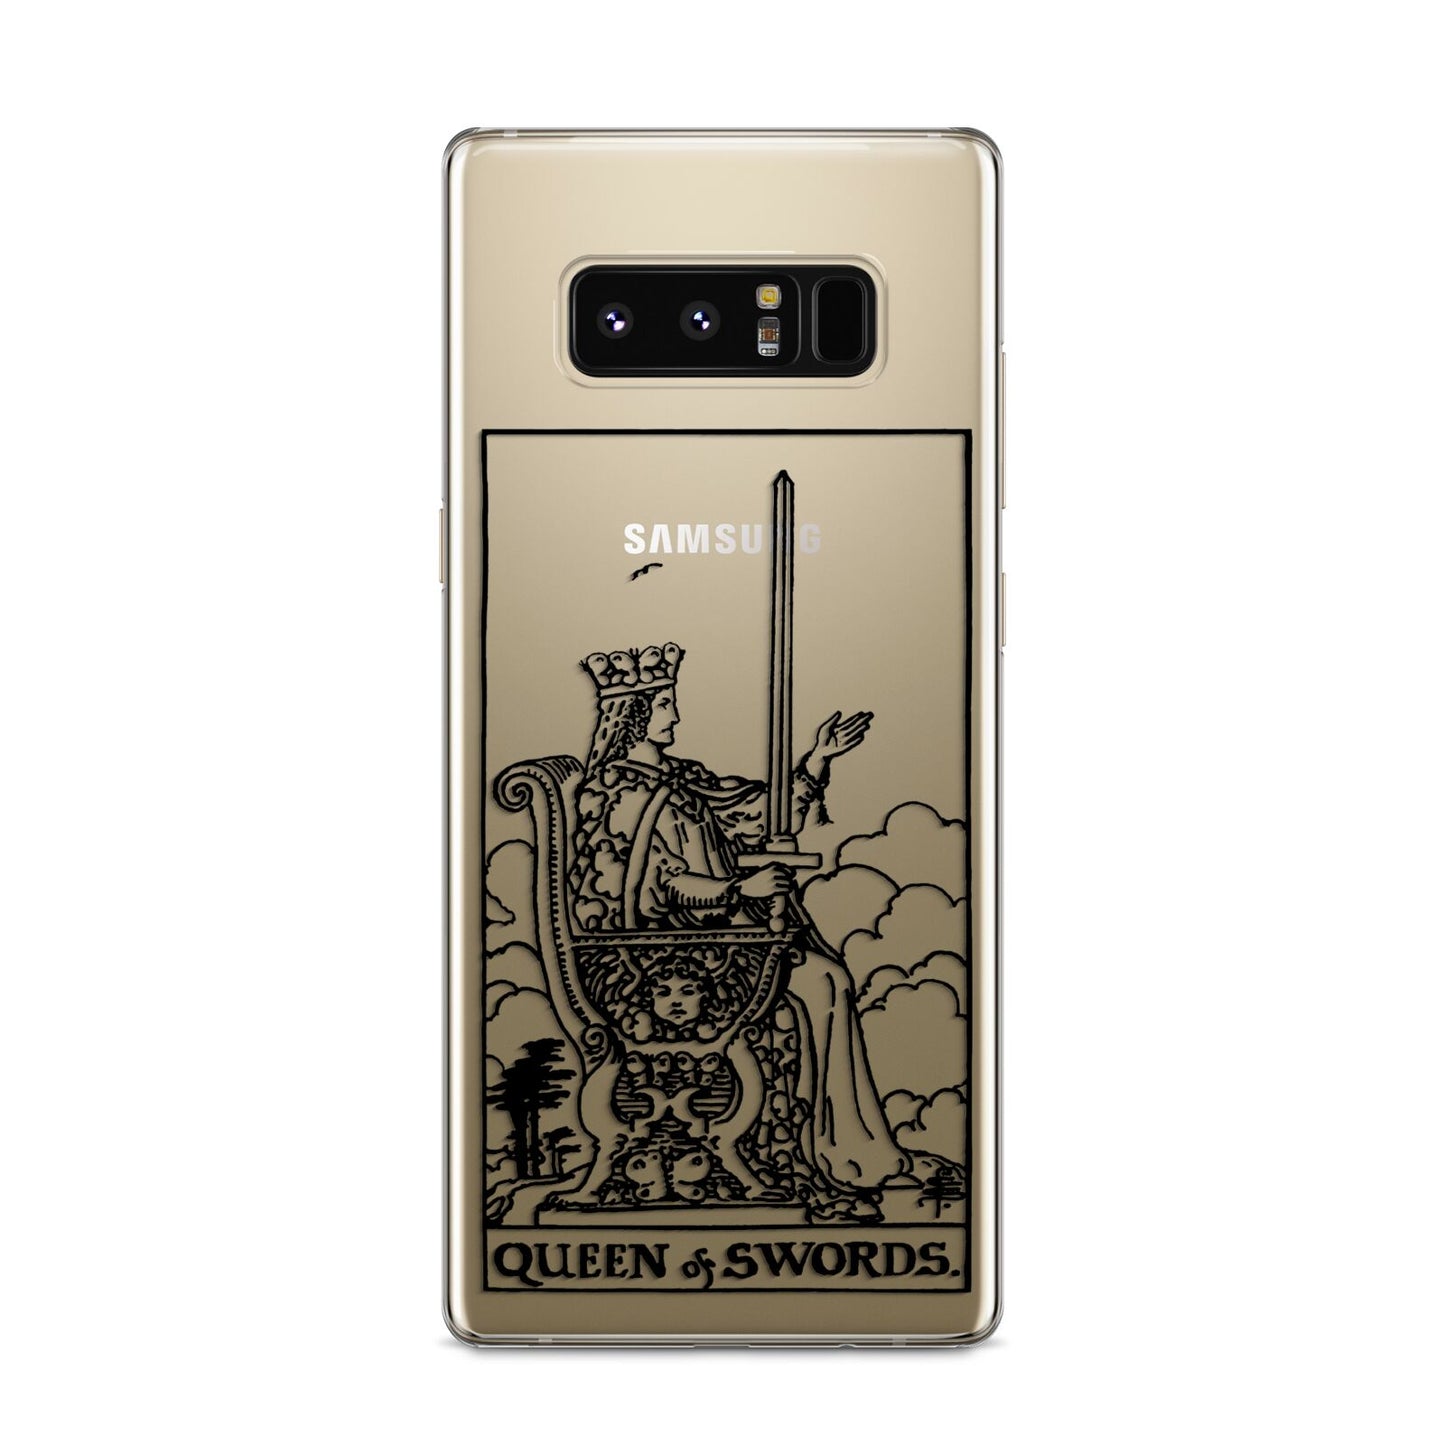 Queen of Swords Monochrome Samsung Galaxy S8 Case